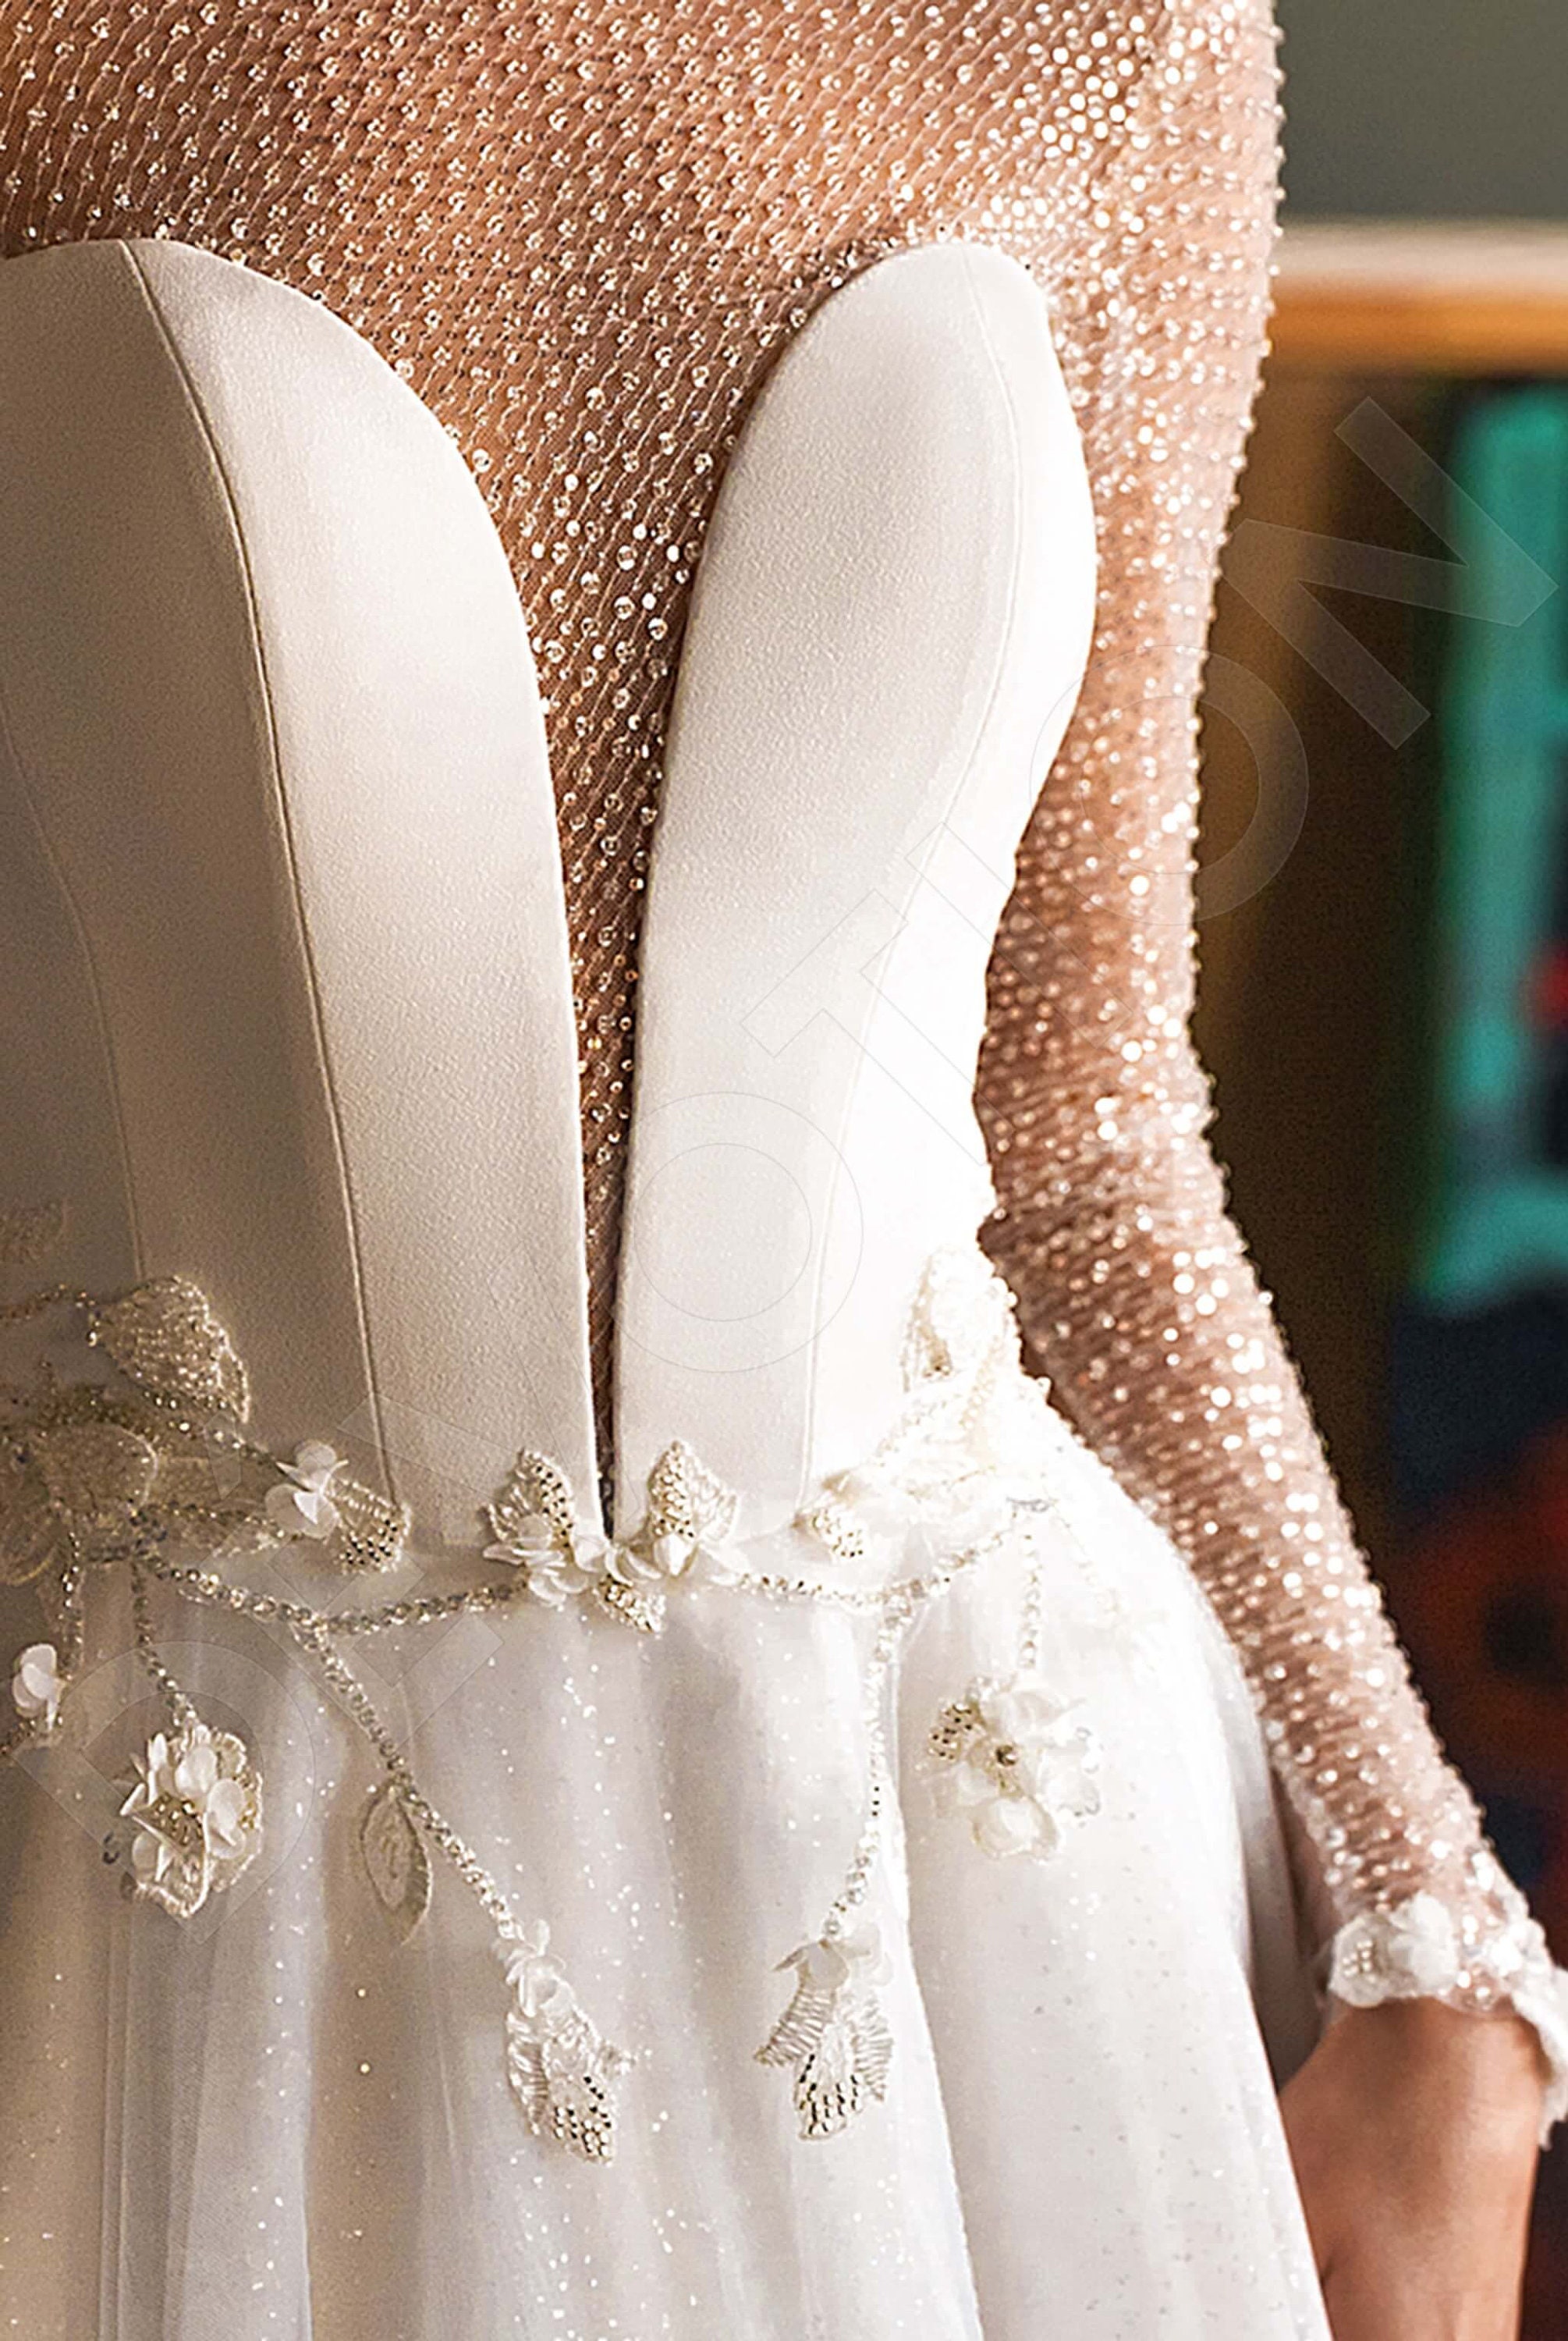 Individual Size A-line Silhouette Mariella Wedding Dress. | Etsy